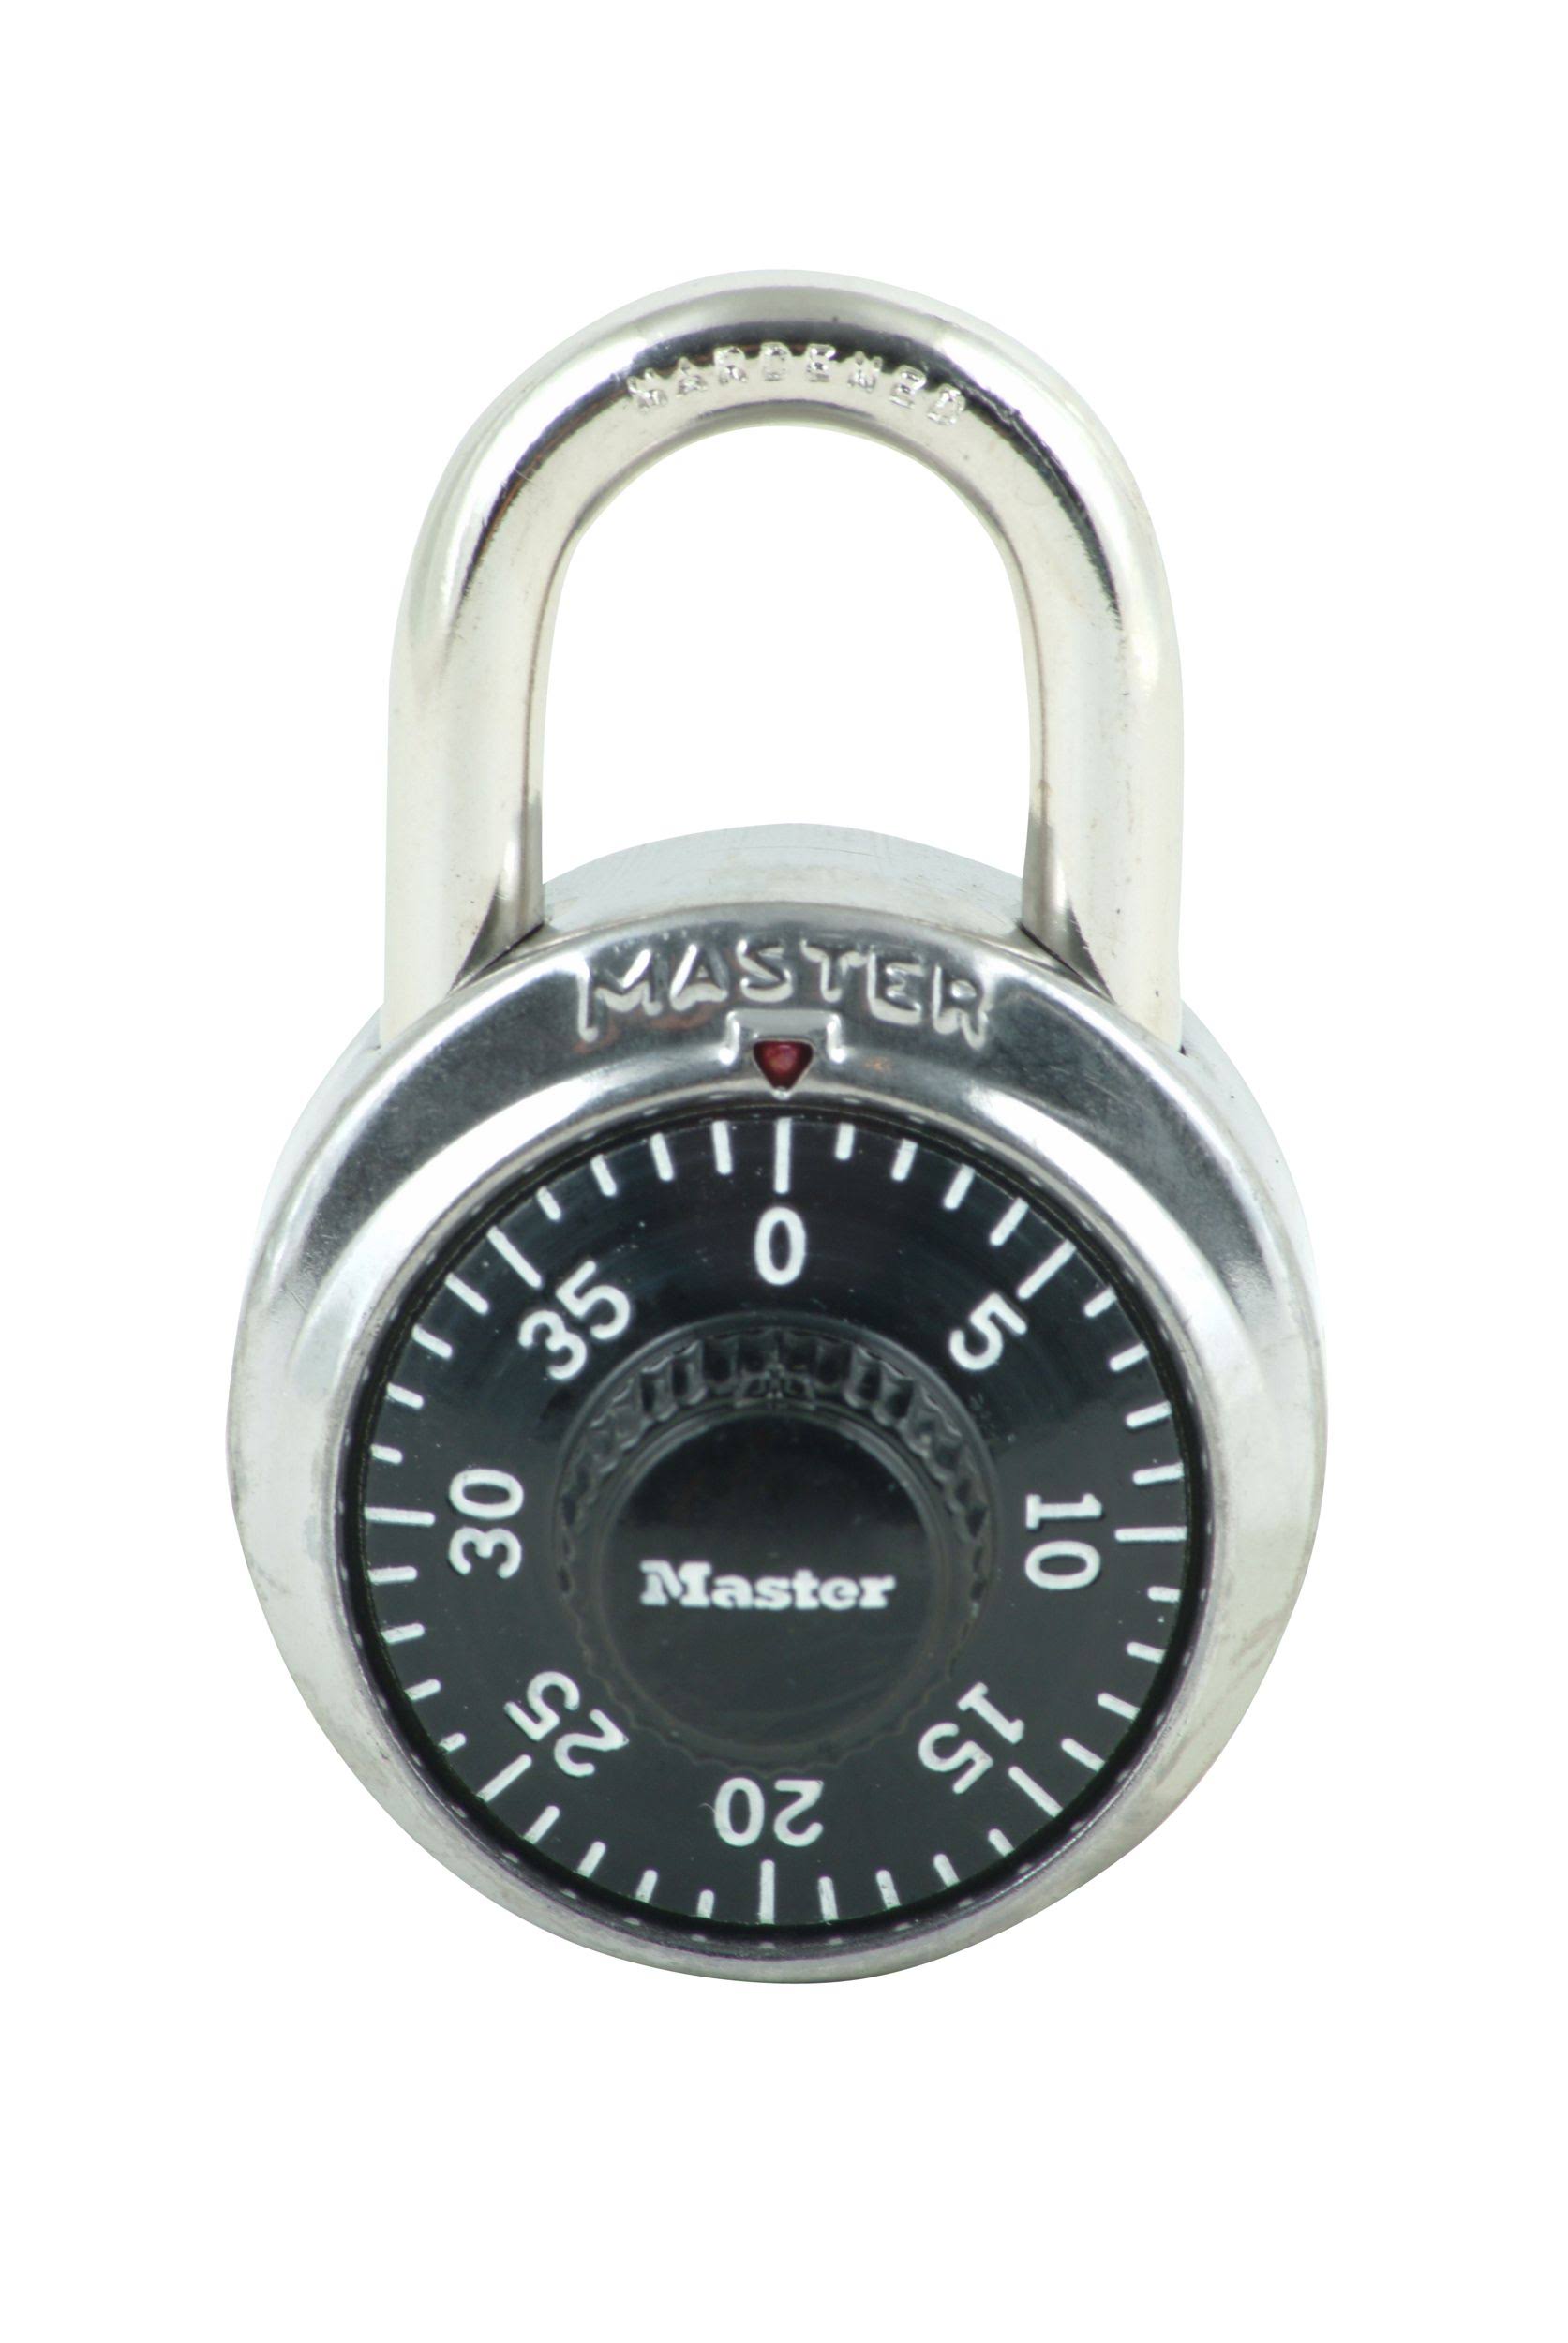 Master Lock Combination Padlock - Stainless Steel, 1 7/8" Wide, Black Dial